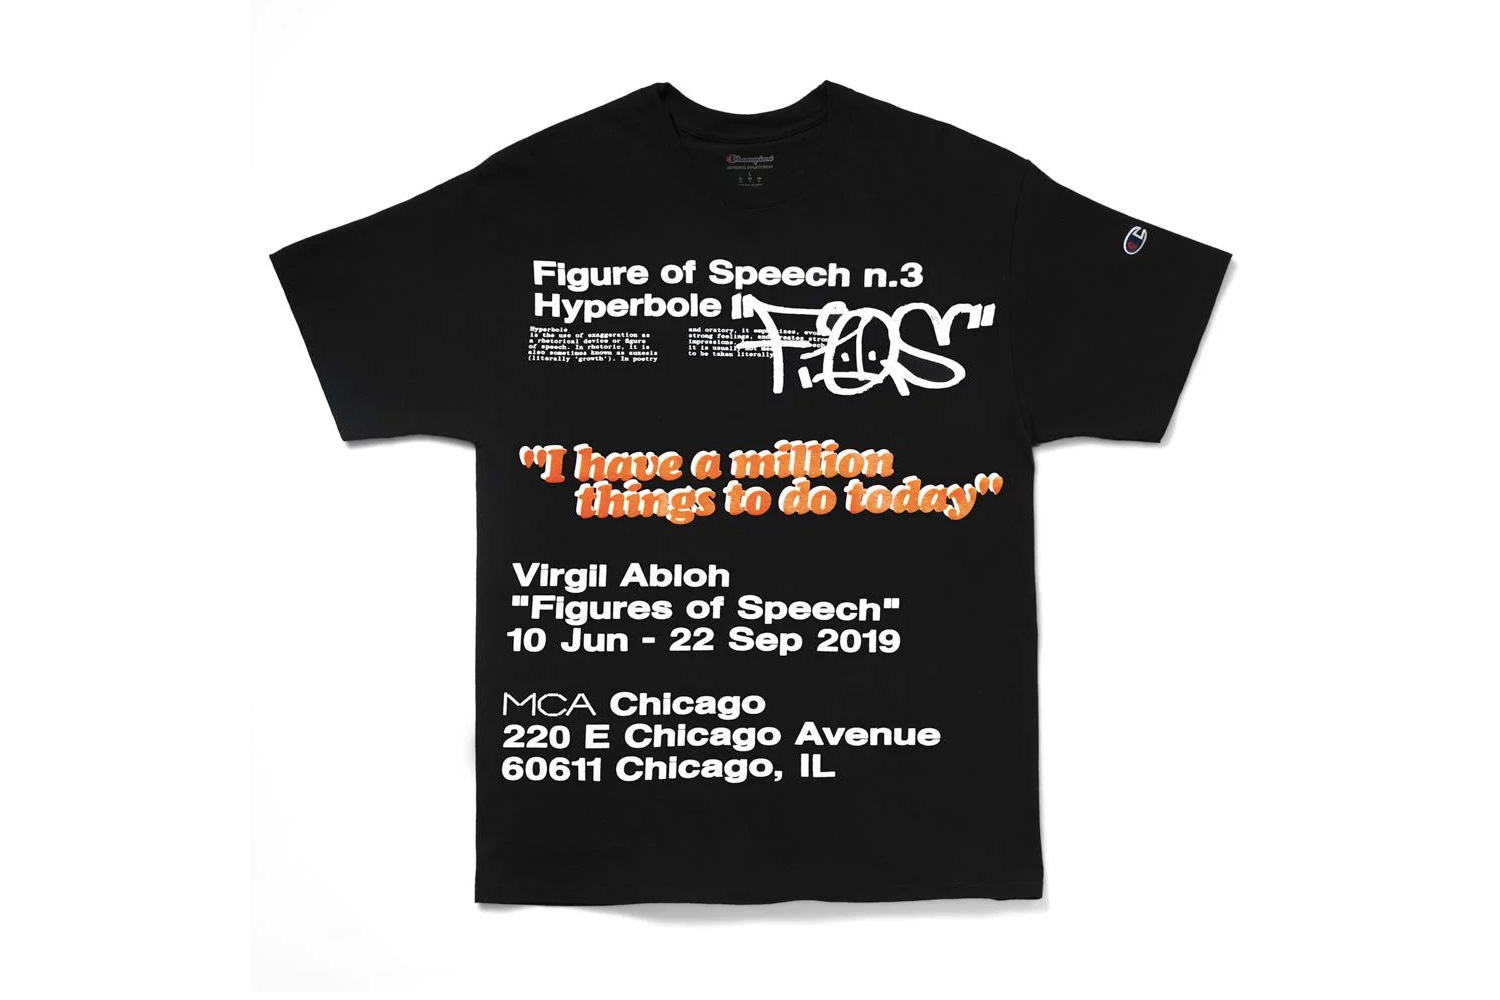 MCA Chicago Drops More Virgil Abloh-Designed Figures of Speech T-Shirts